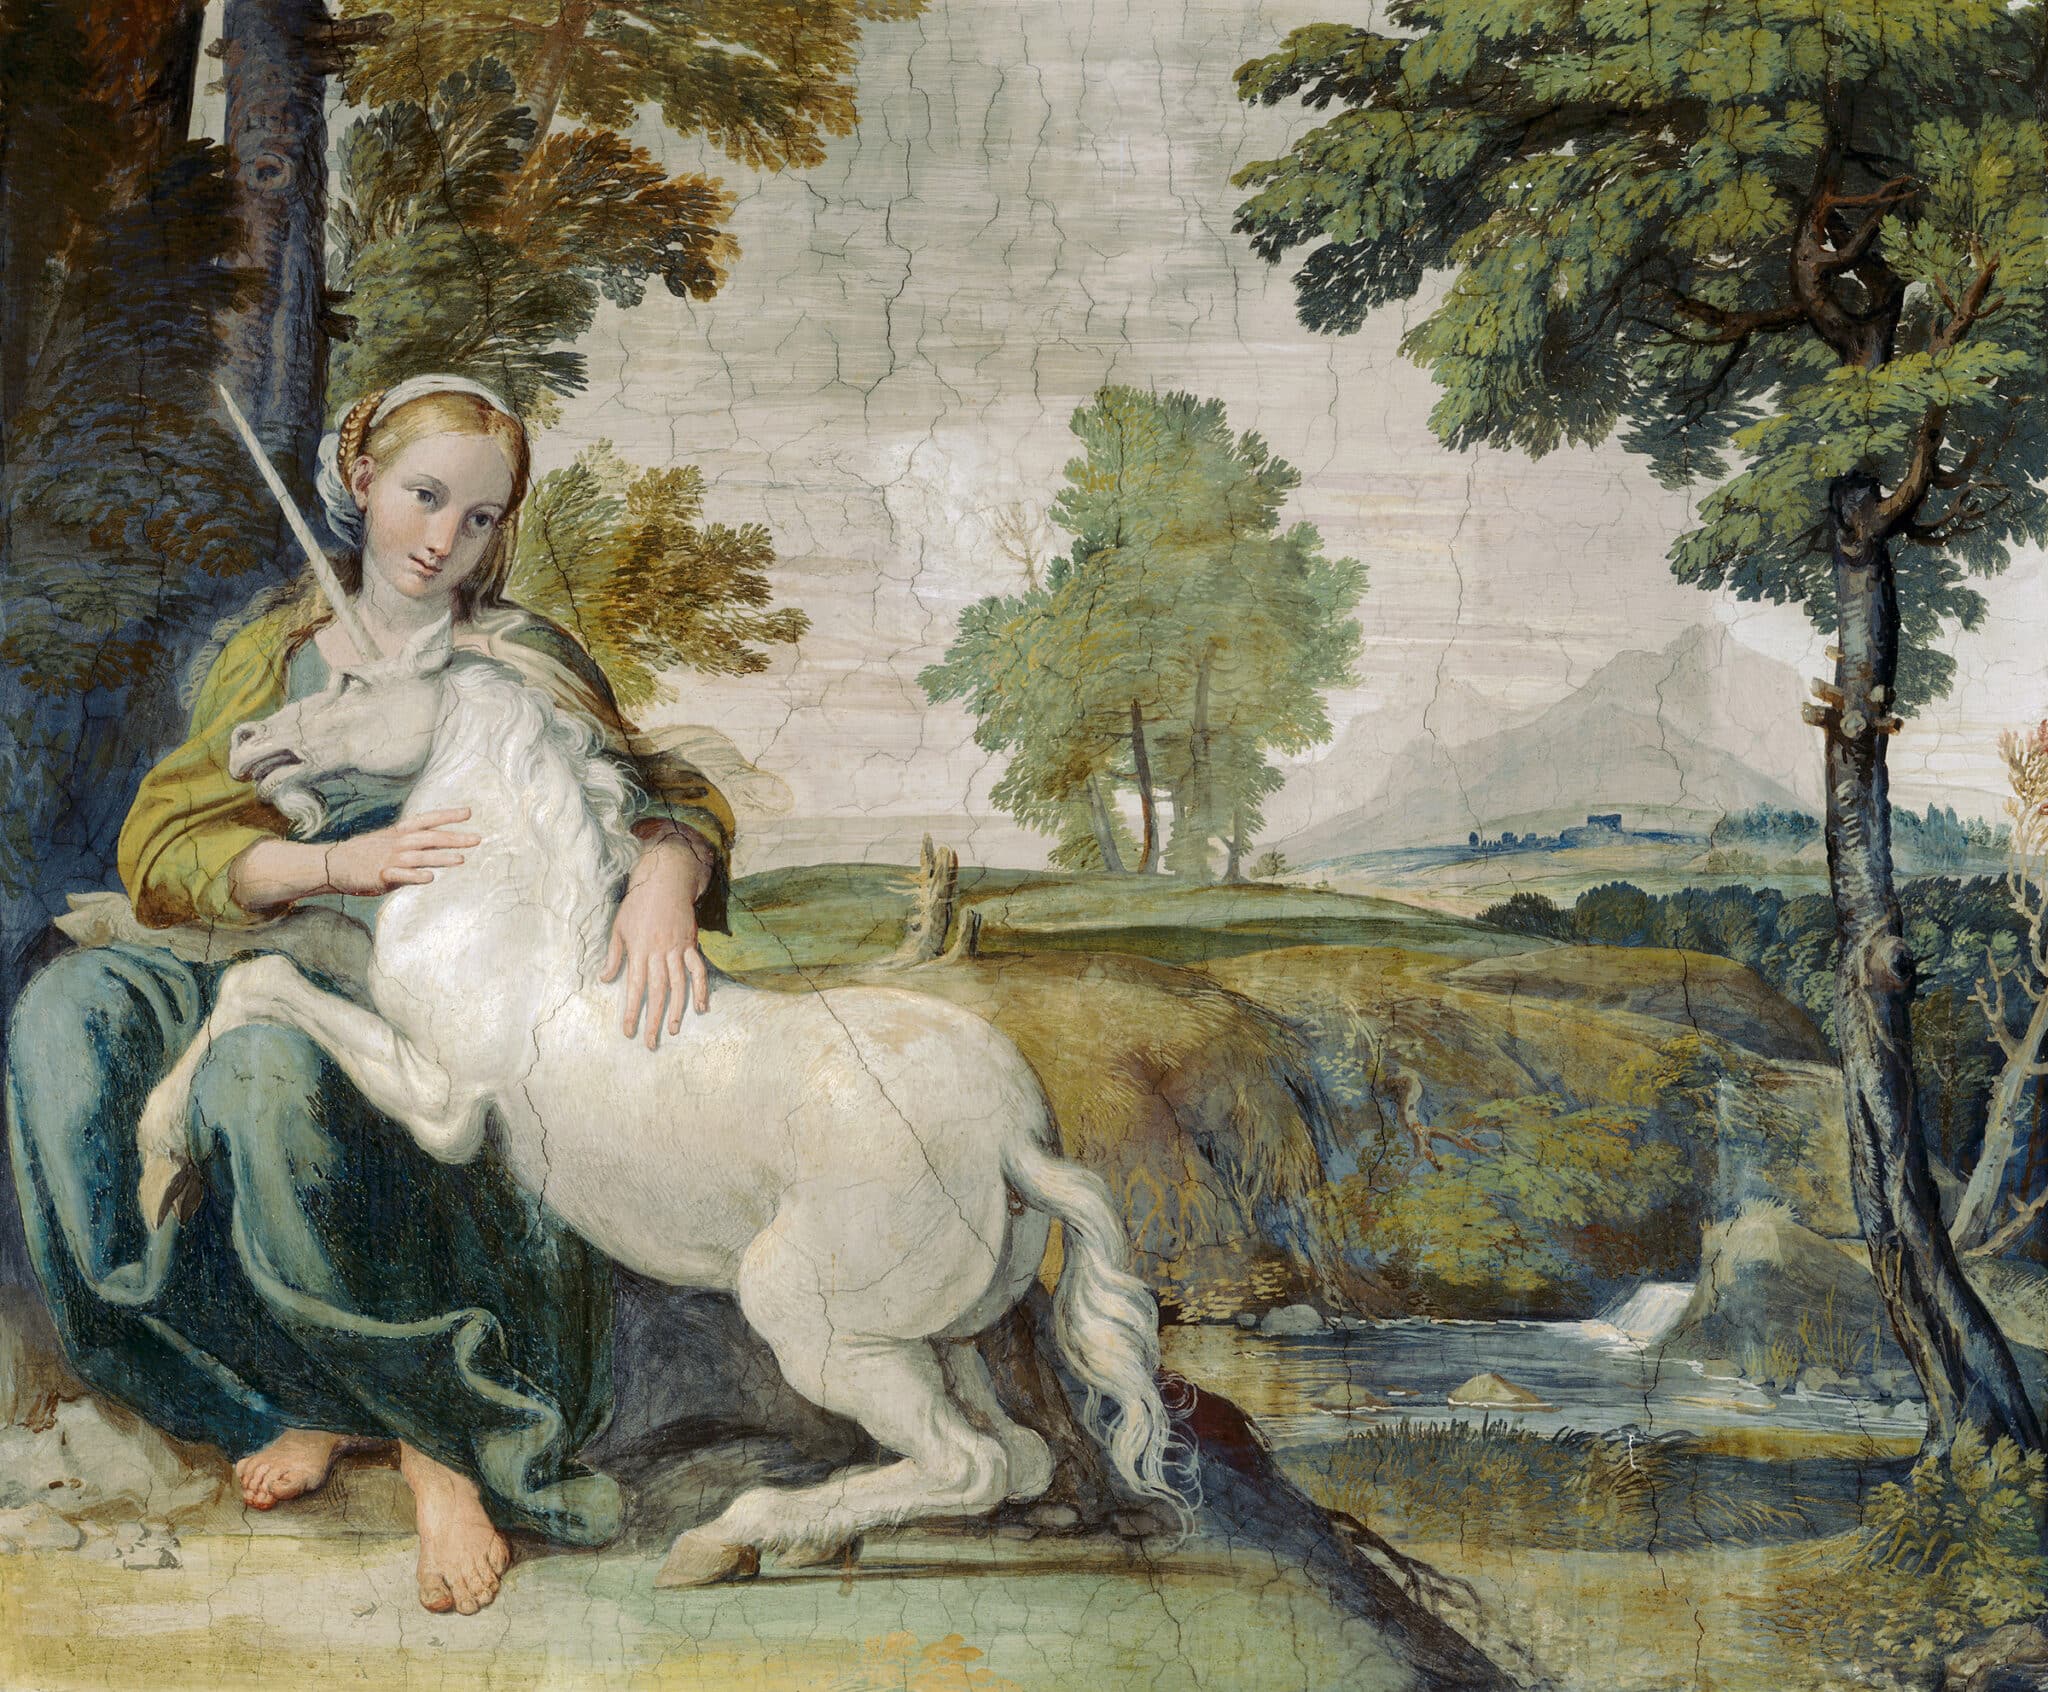 La licorne : Mythes et origines